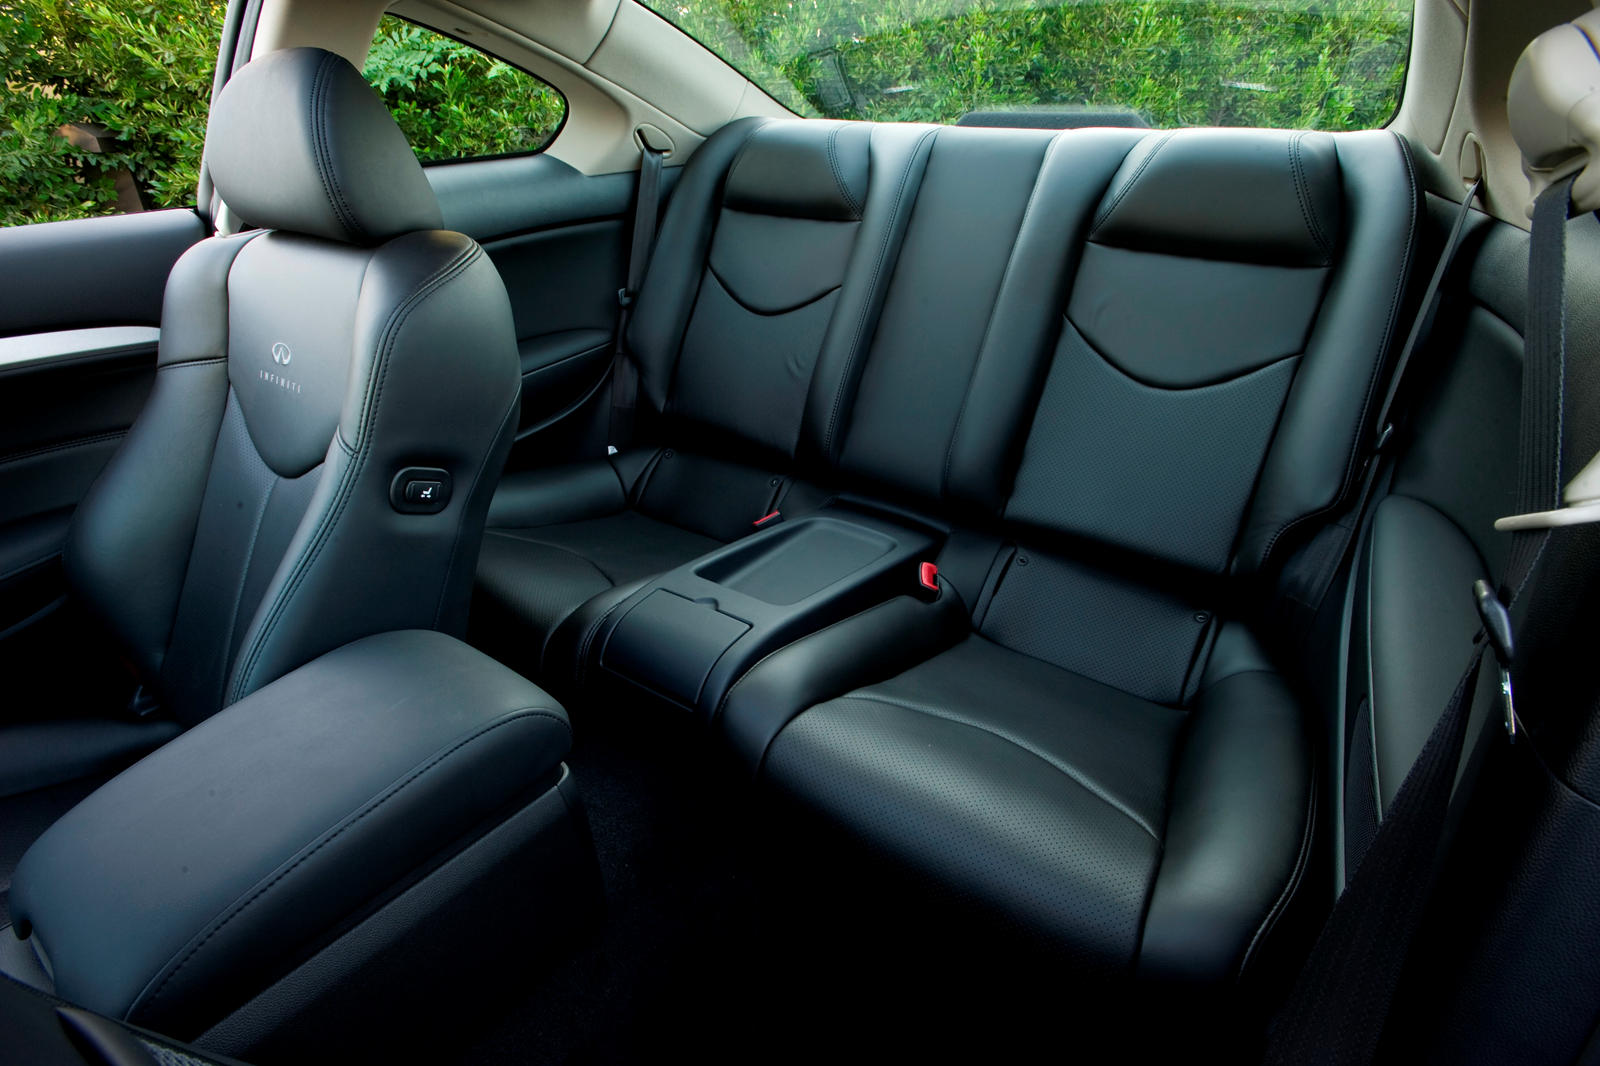 Infiniti G37 interior - Seats